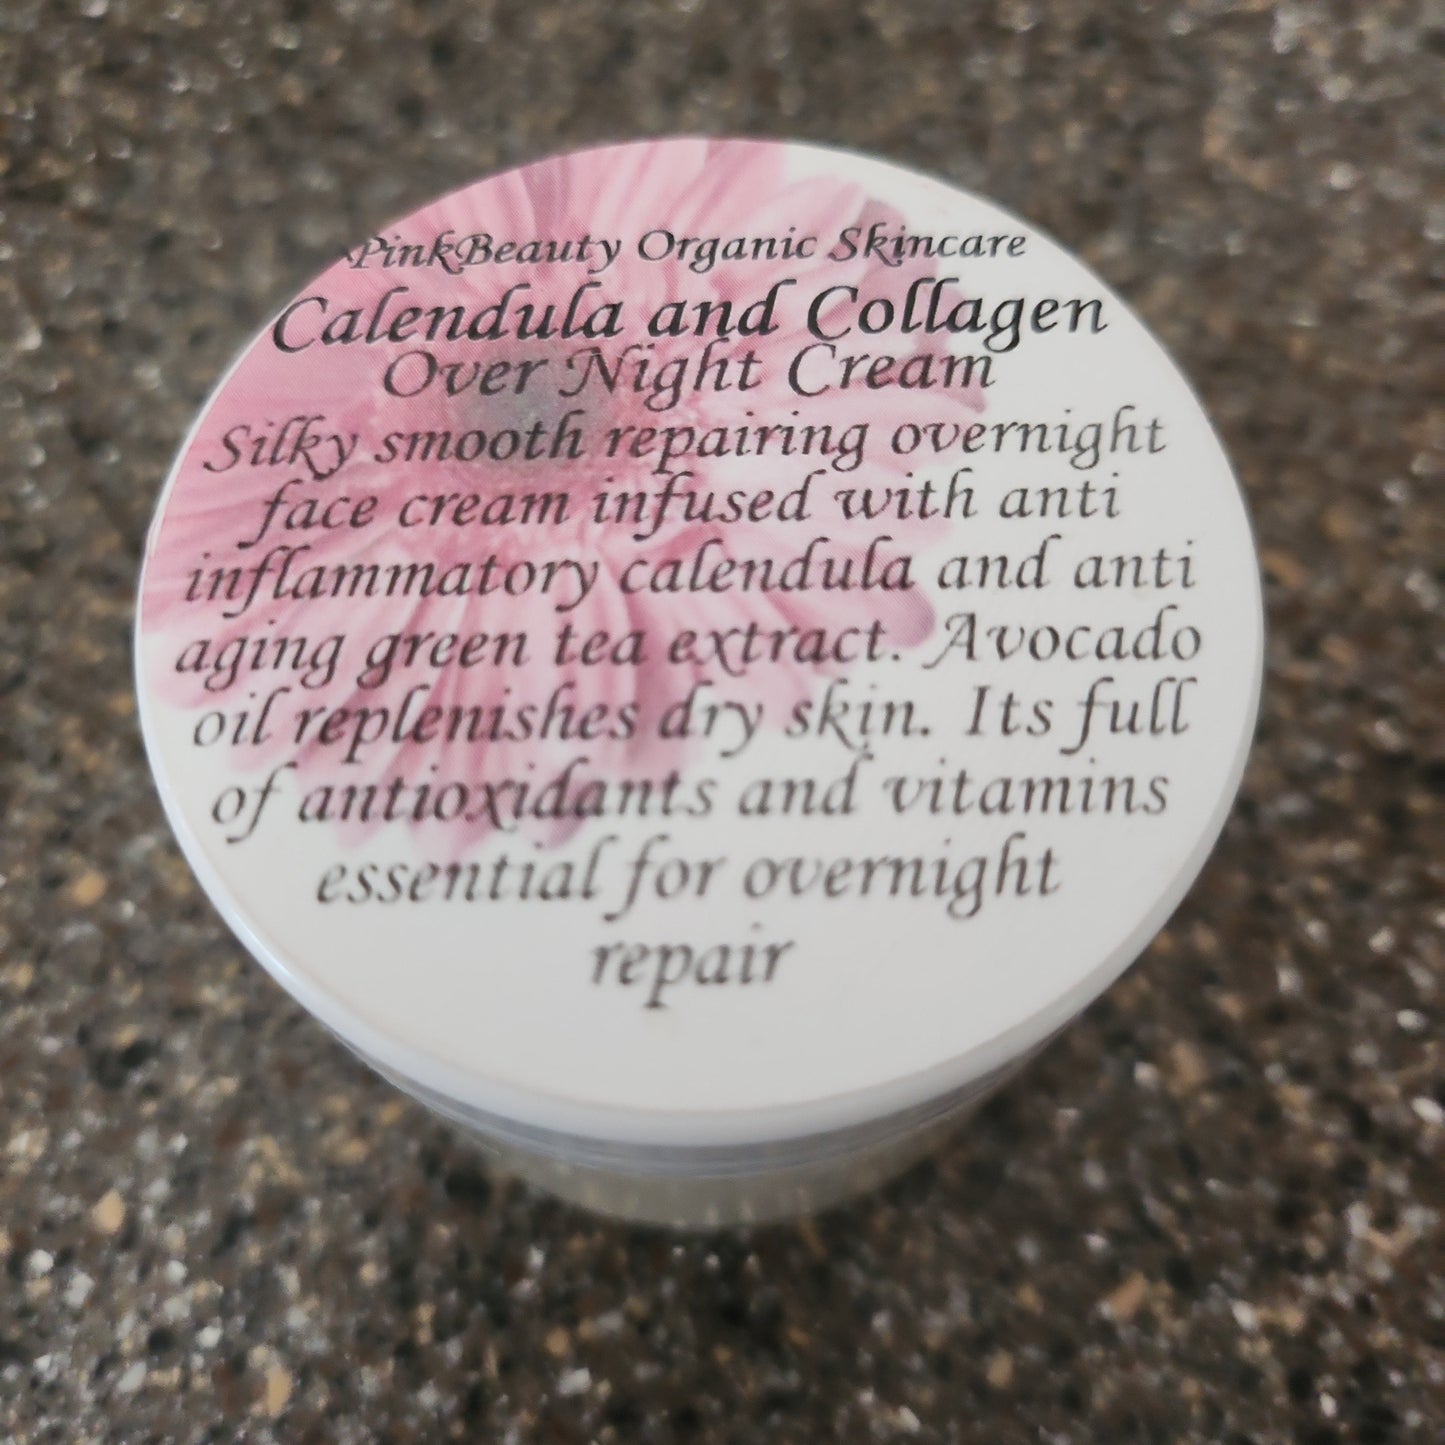 Over Night Cream Calendula and Collagen